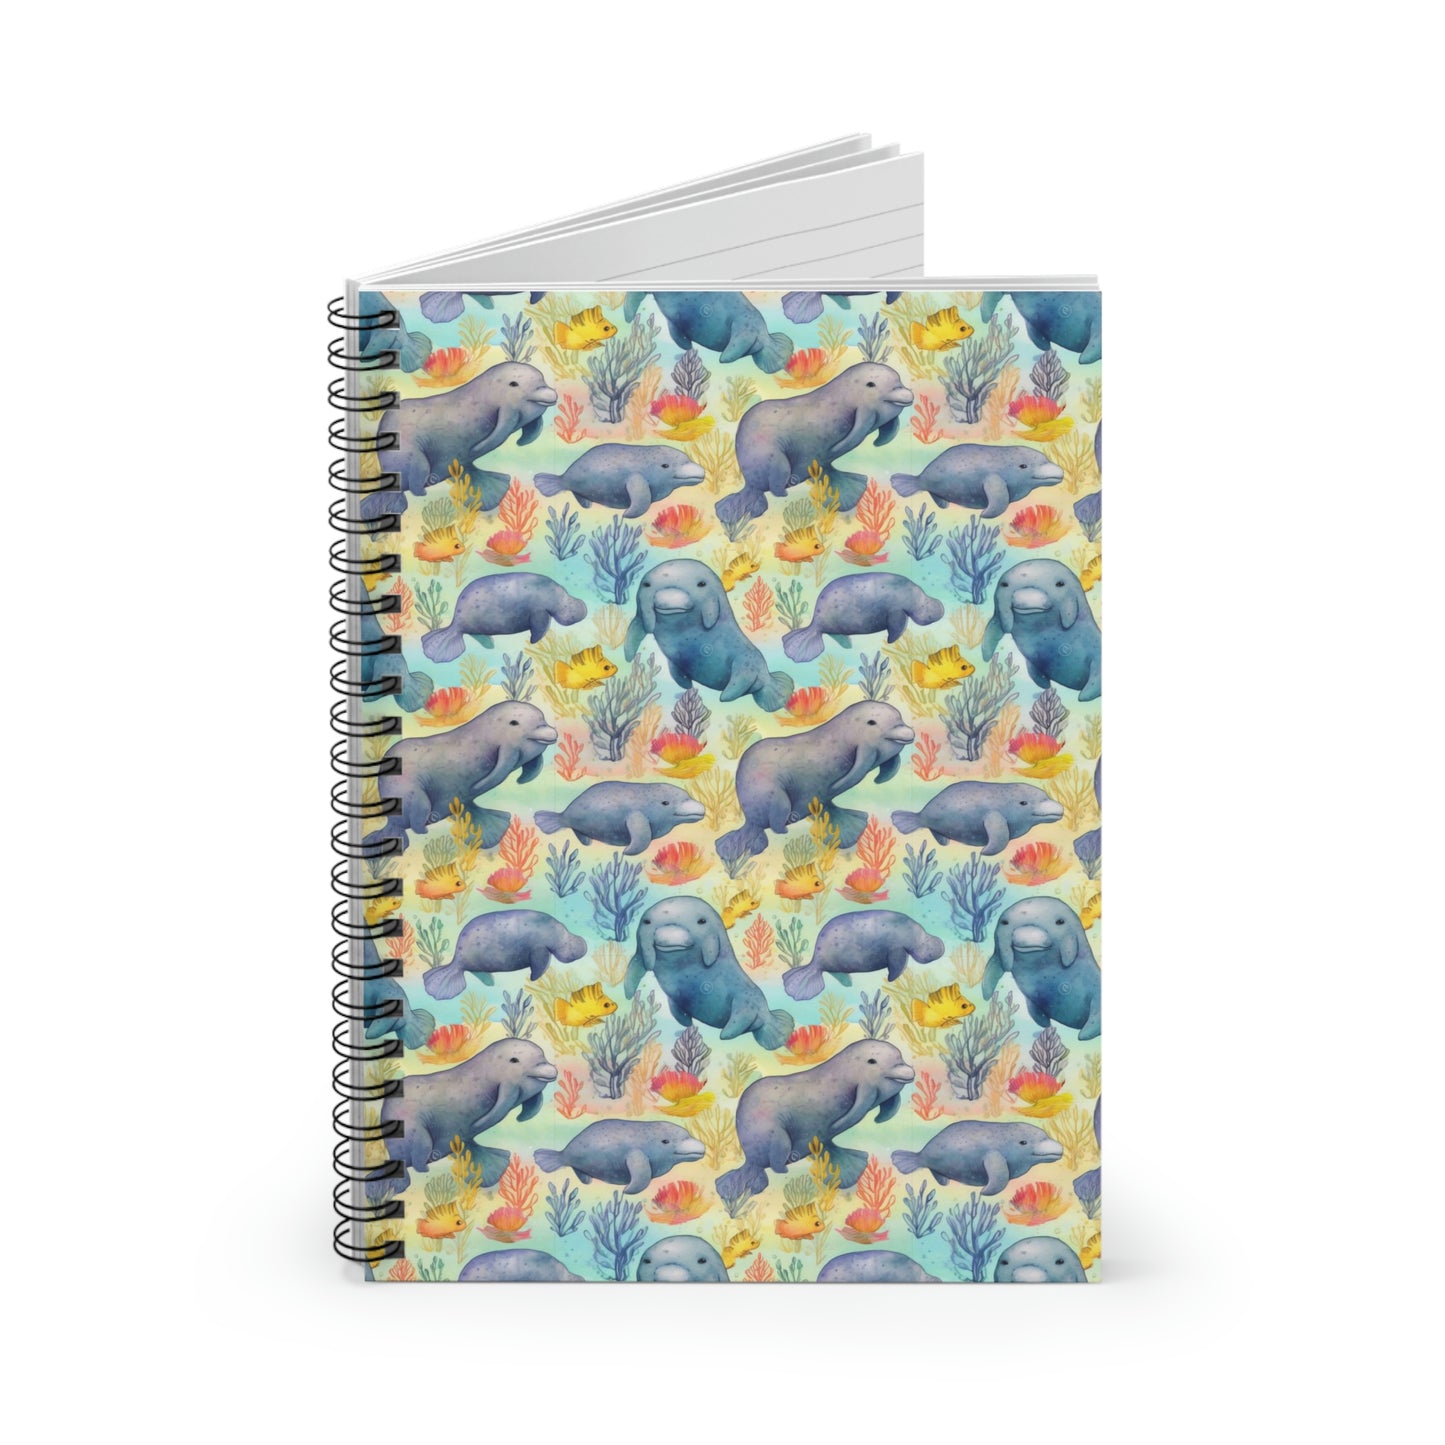 Manatee Spiral Notebook, Watercolor Fish Ocean Sea Pattern Design Journal Traveler Notepad Ruled Line Book Paper Pad Work Aesthetic